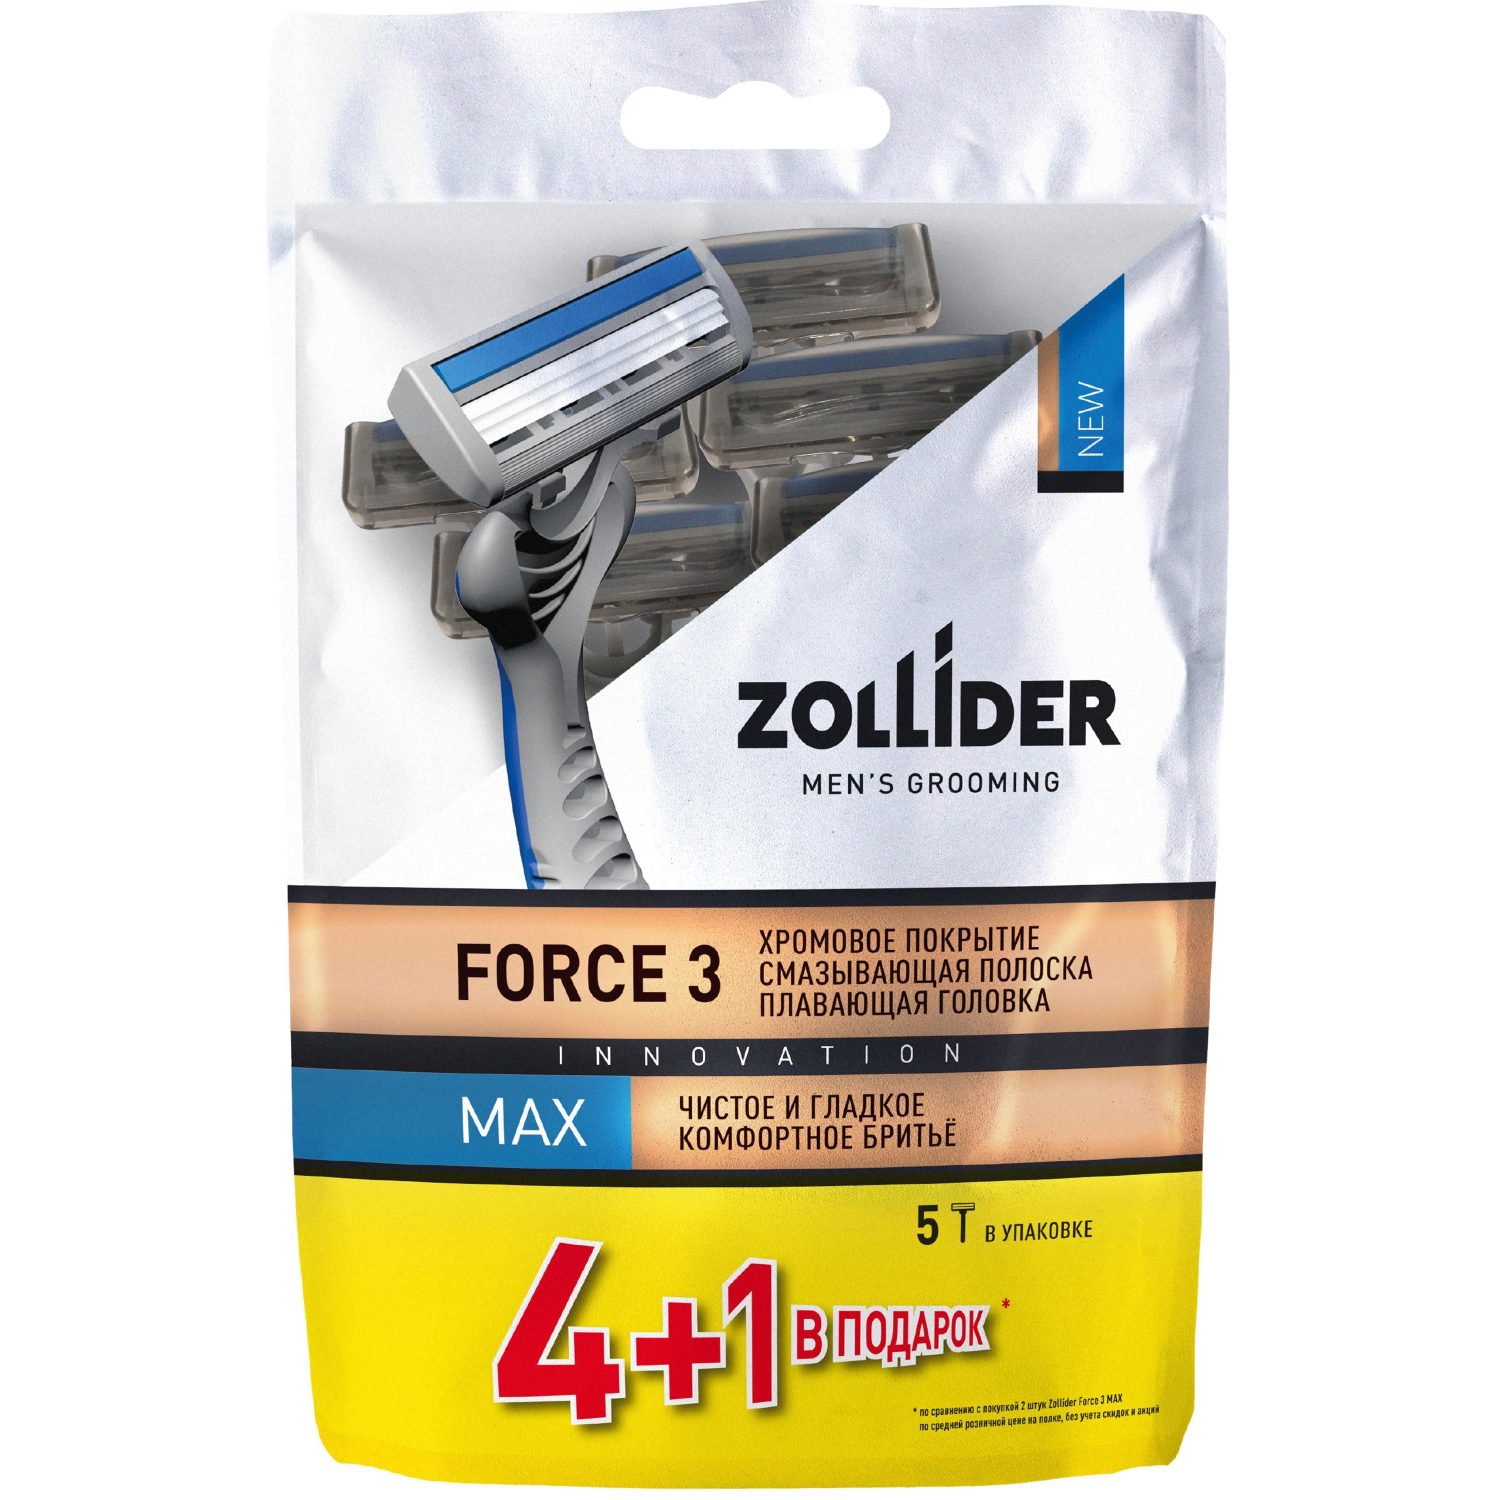 Одноразовые бритвенные станки Zollider Force 3 MAX 3 лезвия 4+1 шт станки одноразовые для бритья bic metal 6 шт